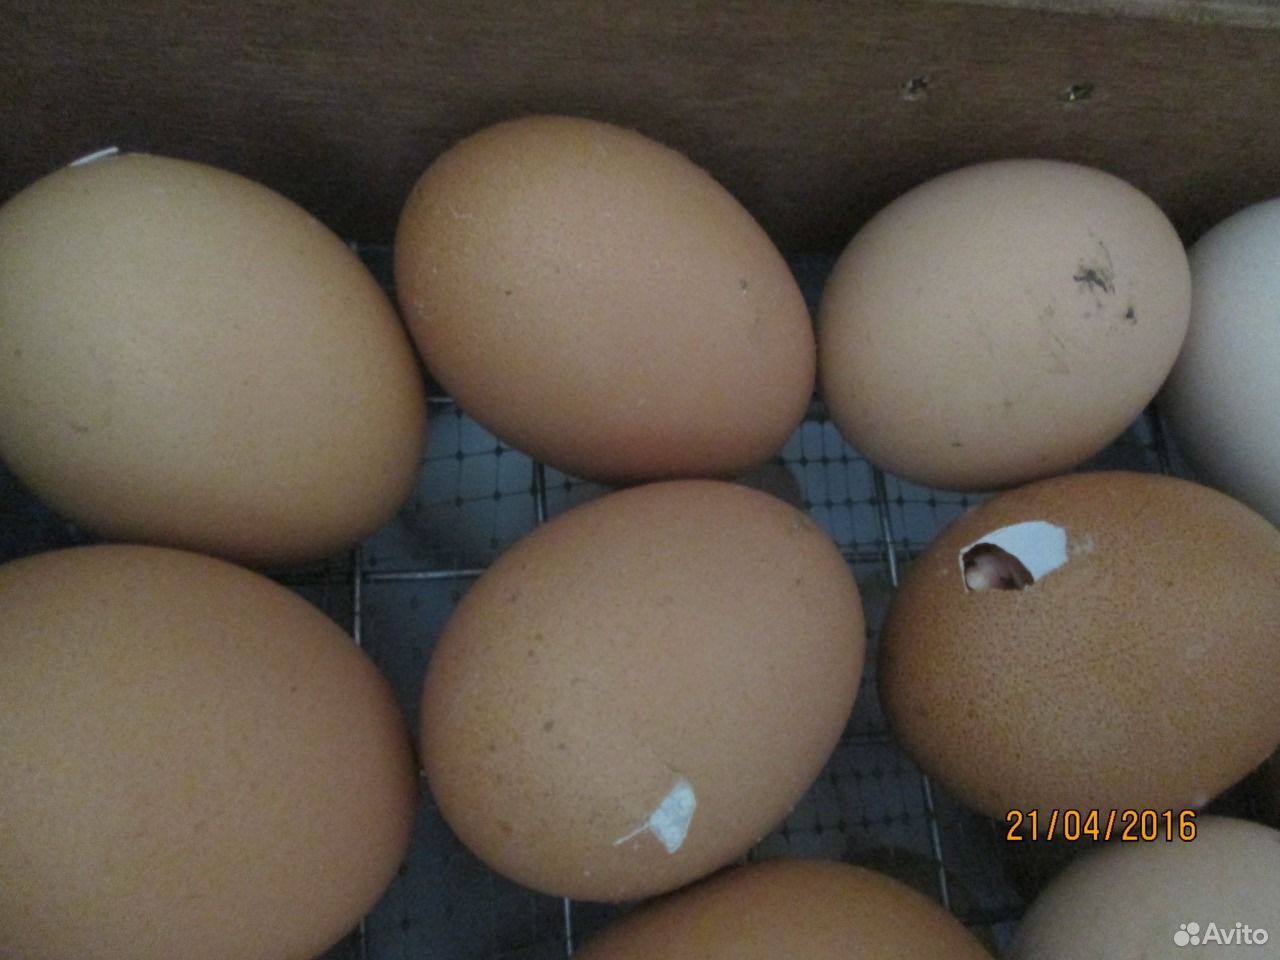 Купить яйца брама. Яйцо инкубационное Брама. Яйца Брама. Купить инкубационное яйцо Брама. Брама светлая как выглядит яйцо.